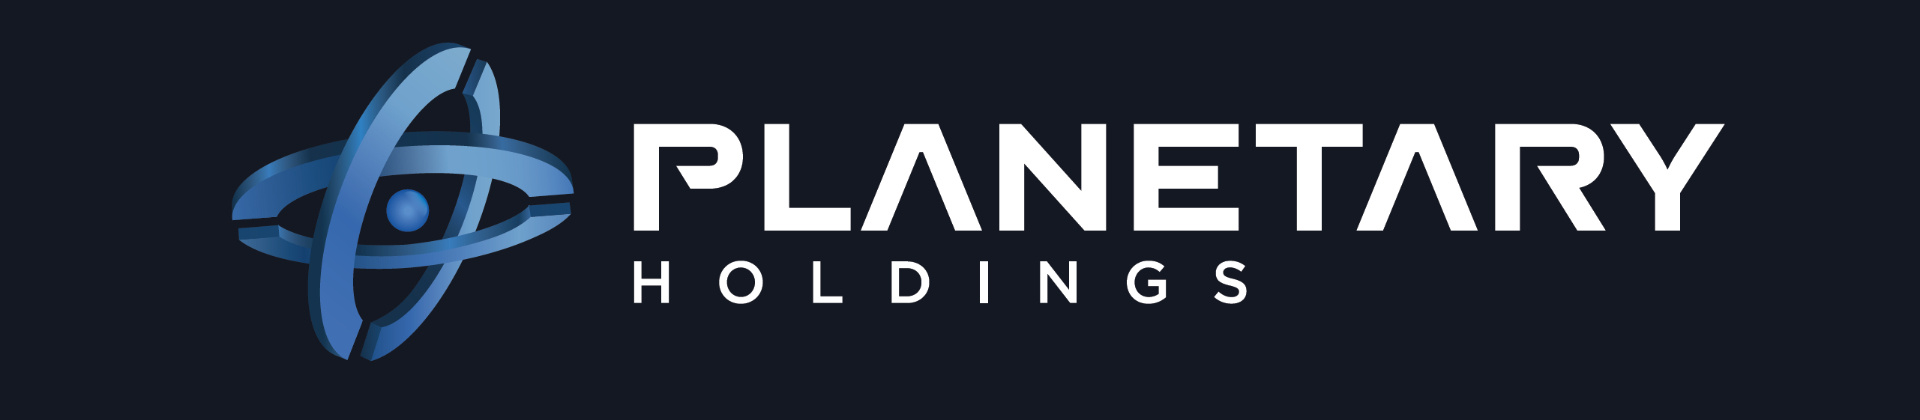 Planetary Holdings, LLC